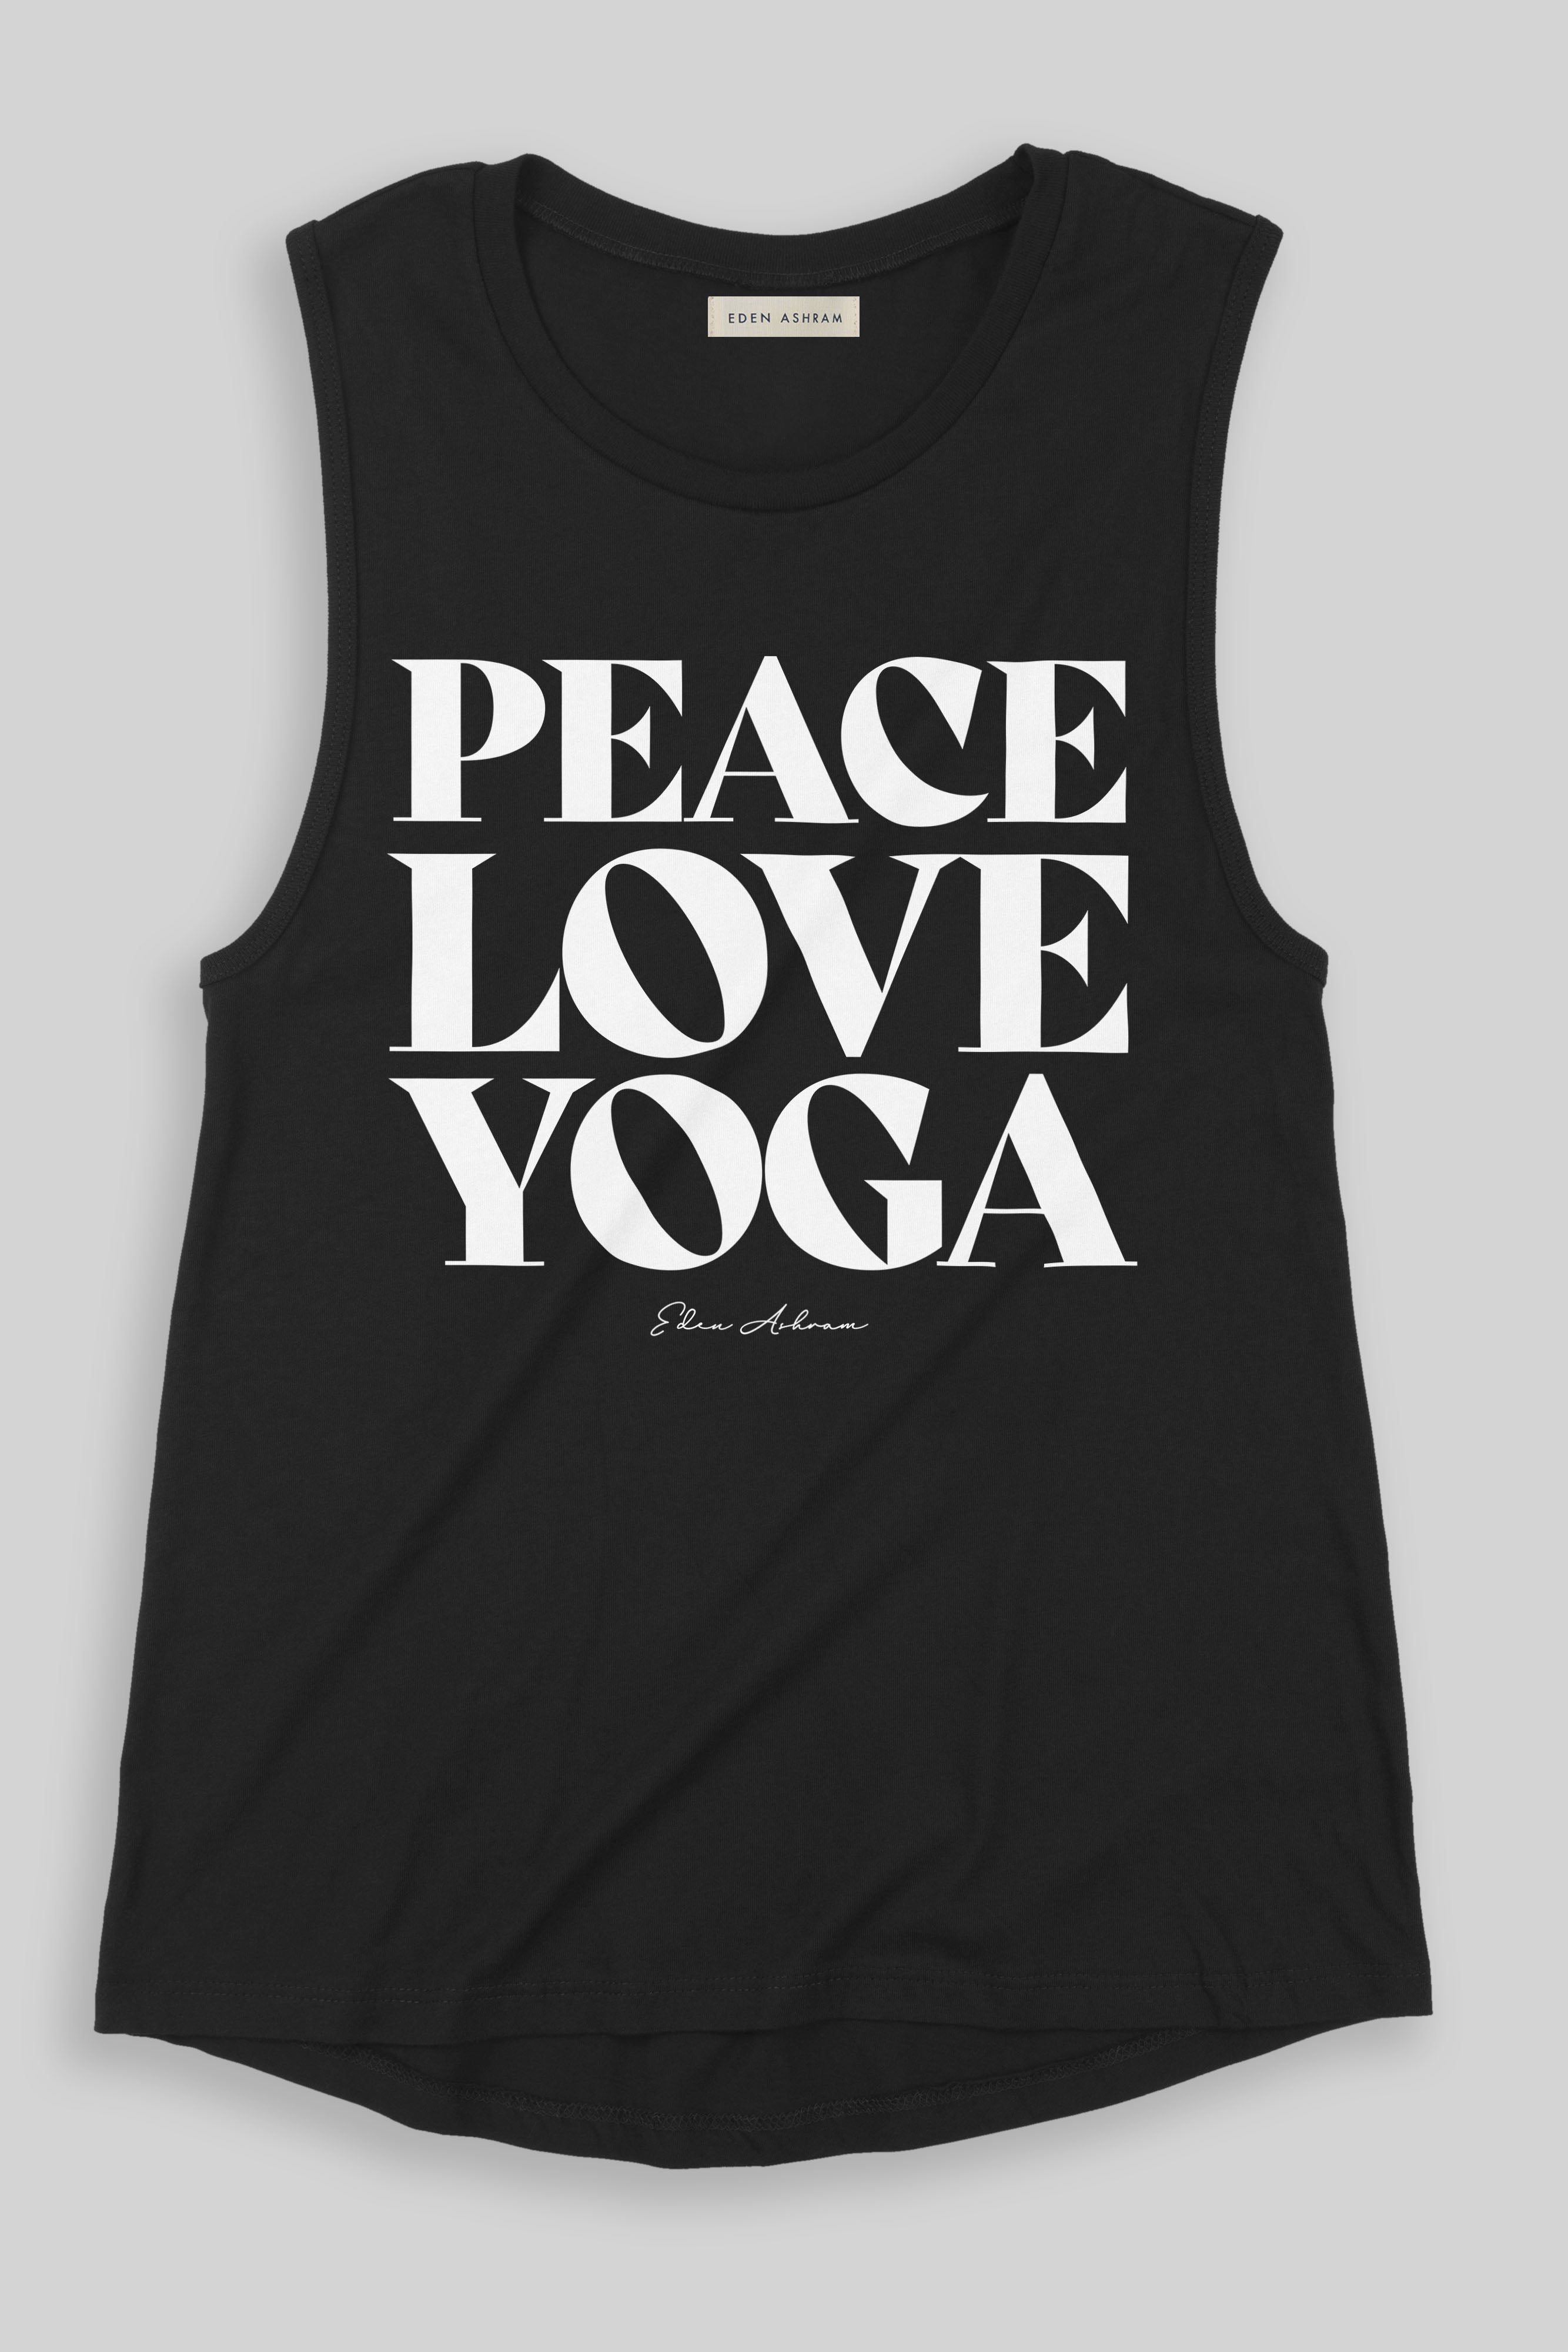 EDEN ASHRAM Peace, Love, Yoga Super Soft Muscle Tank Black